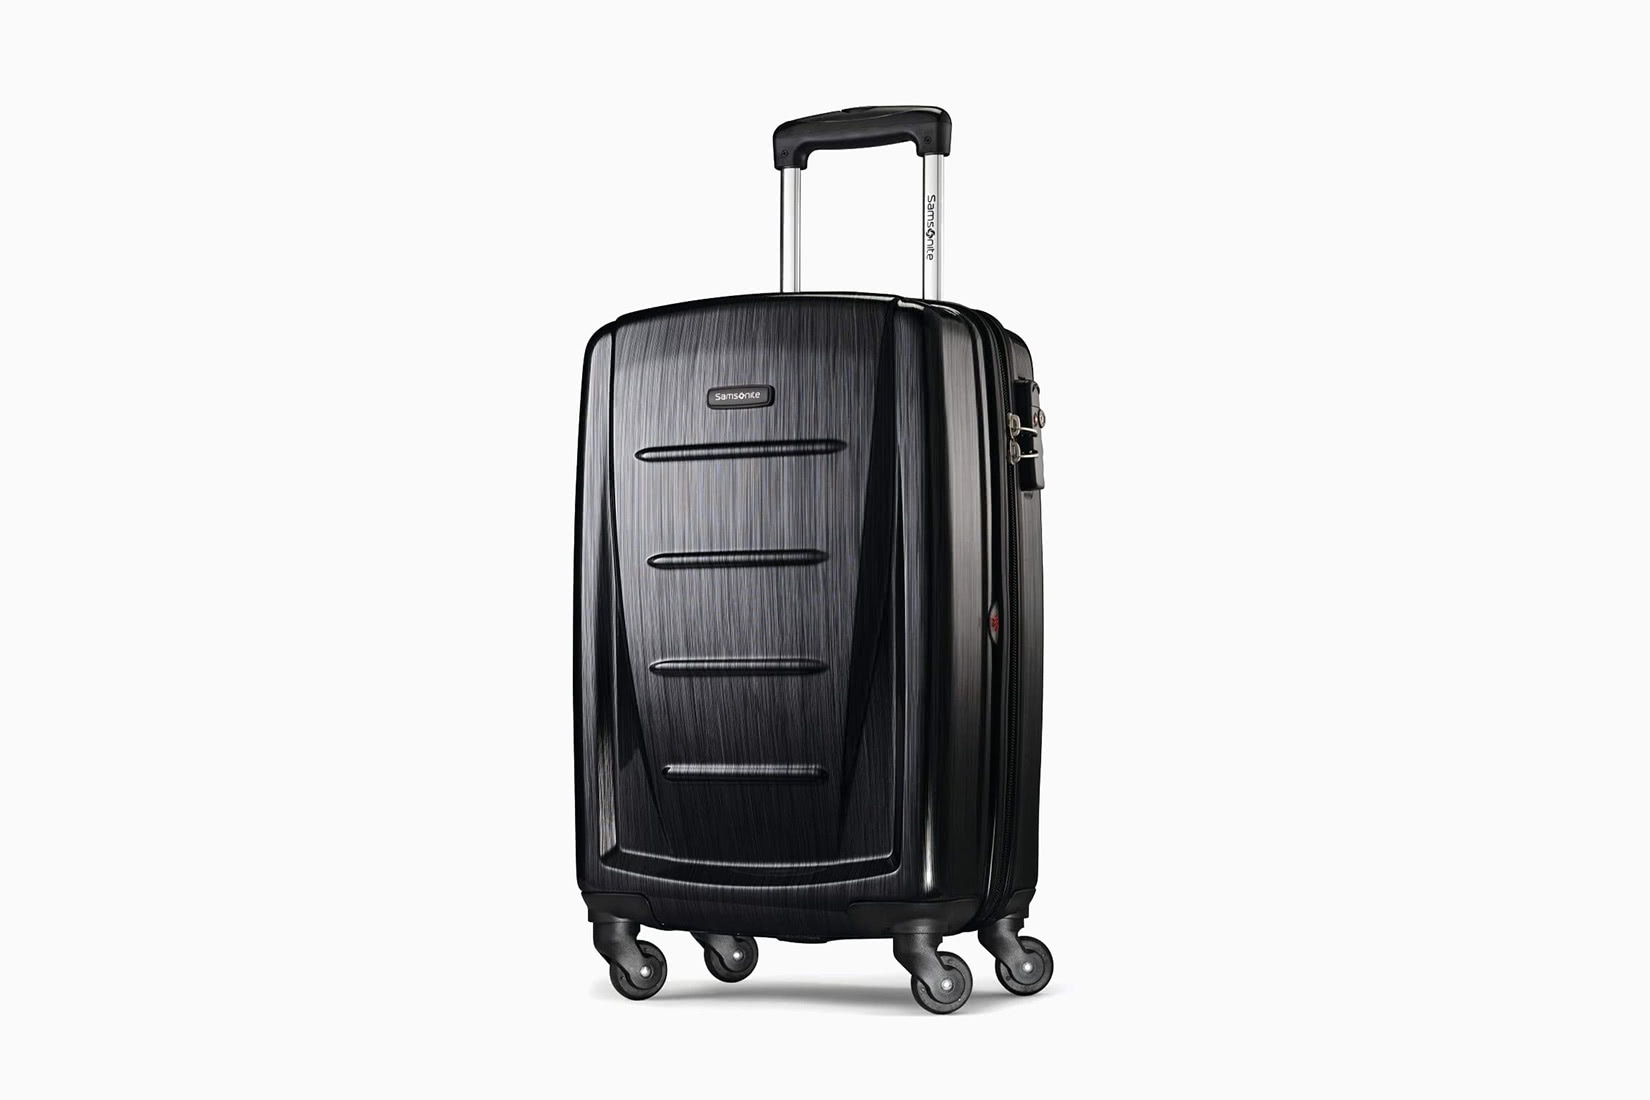 best carry-on suitcase travel samsonite under 100 - Luxe Digital